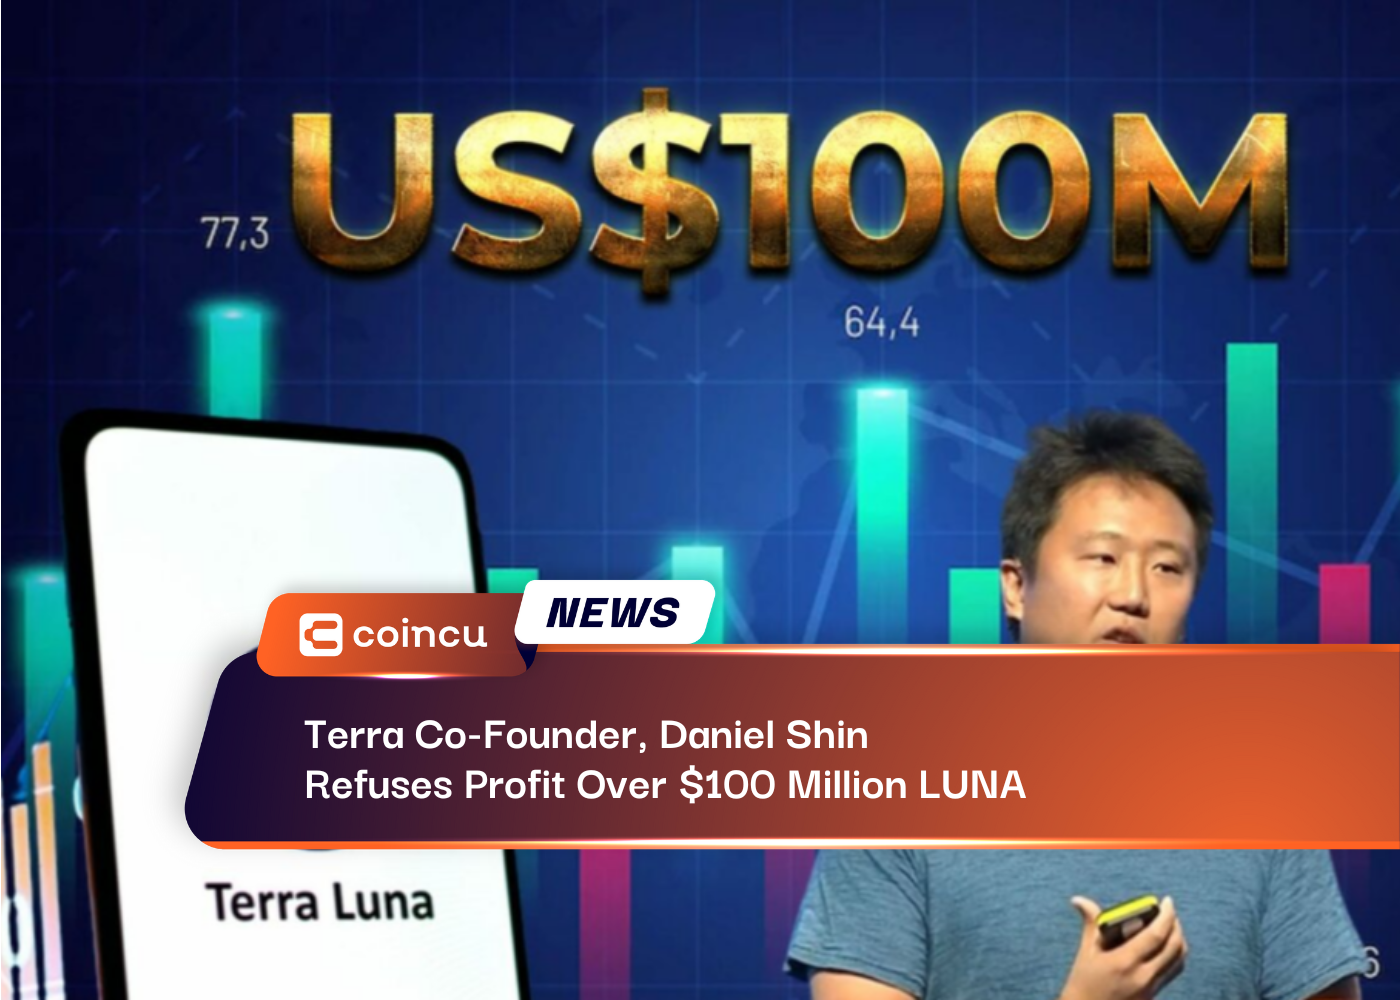 Terra Co-Founder, Daniel Shin Refuses Profit Over $100 Million LUNA